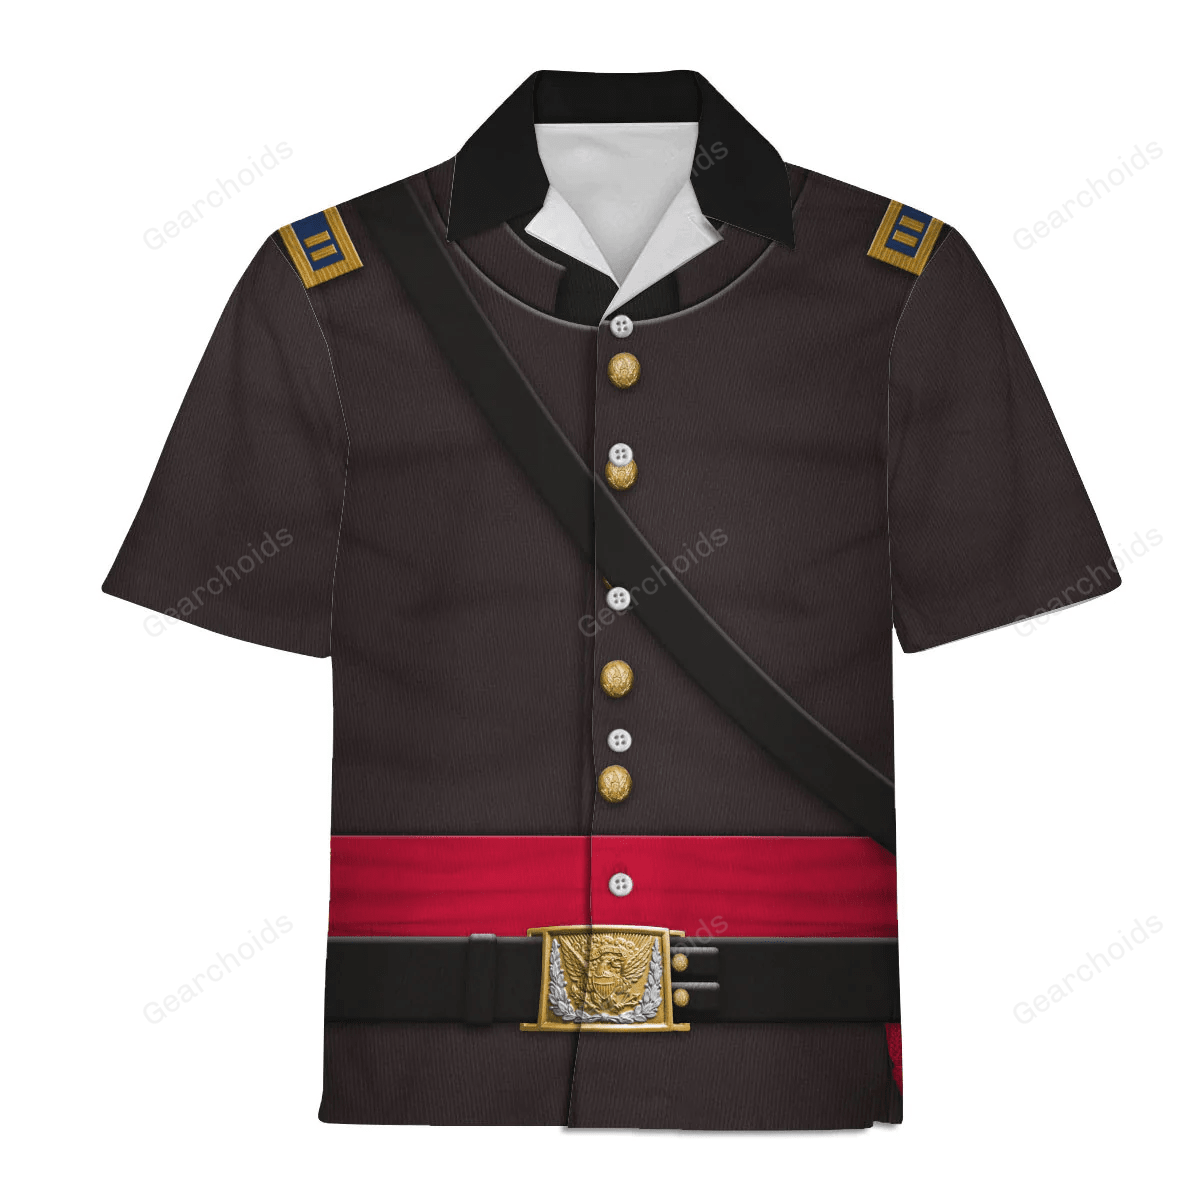 Union Army- Captain Of Infantry Uniform Hawaiian Shirt